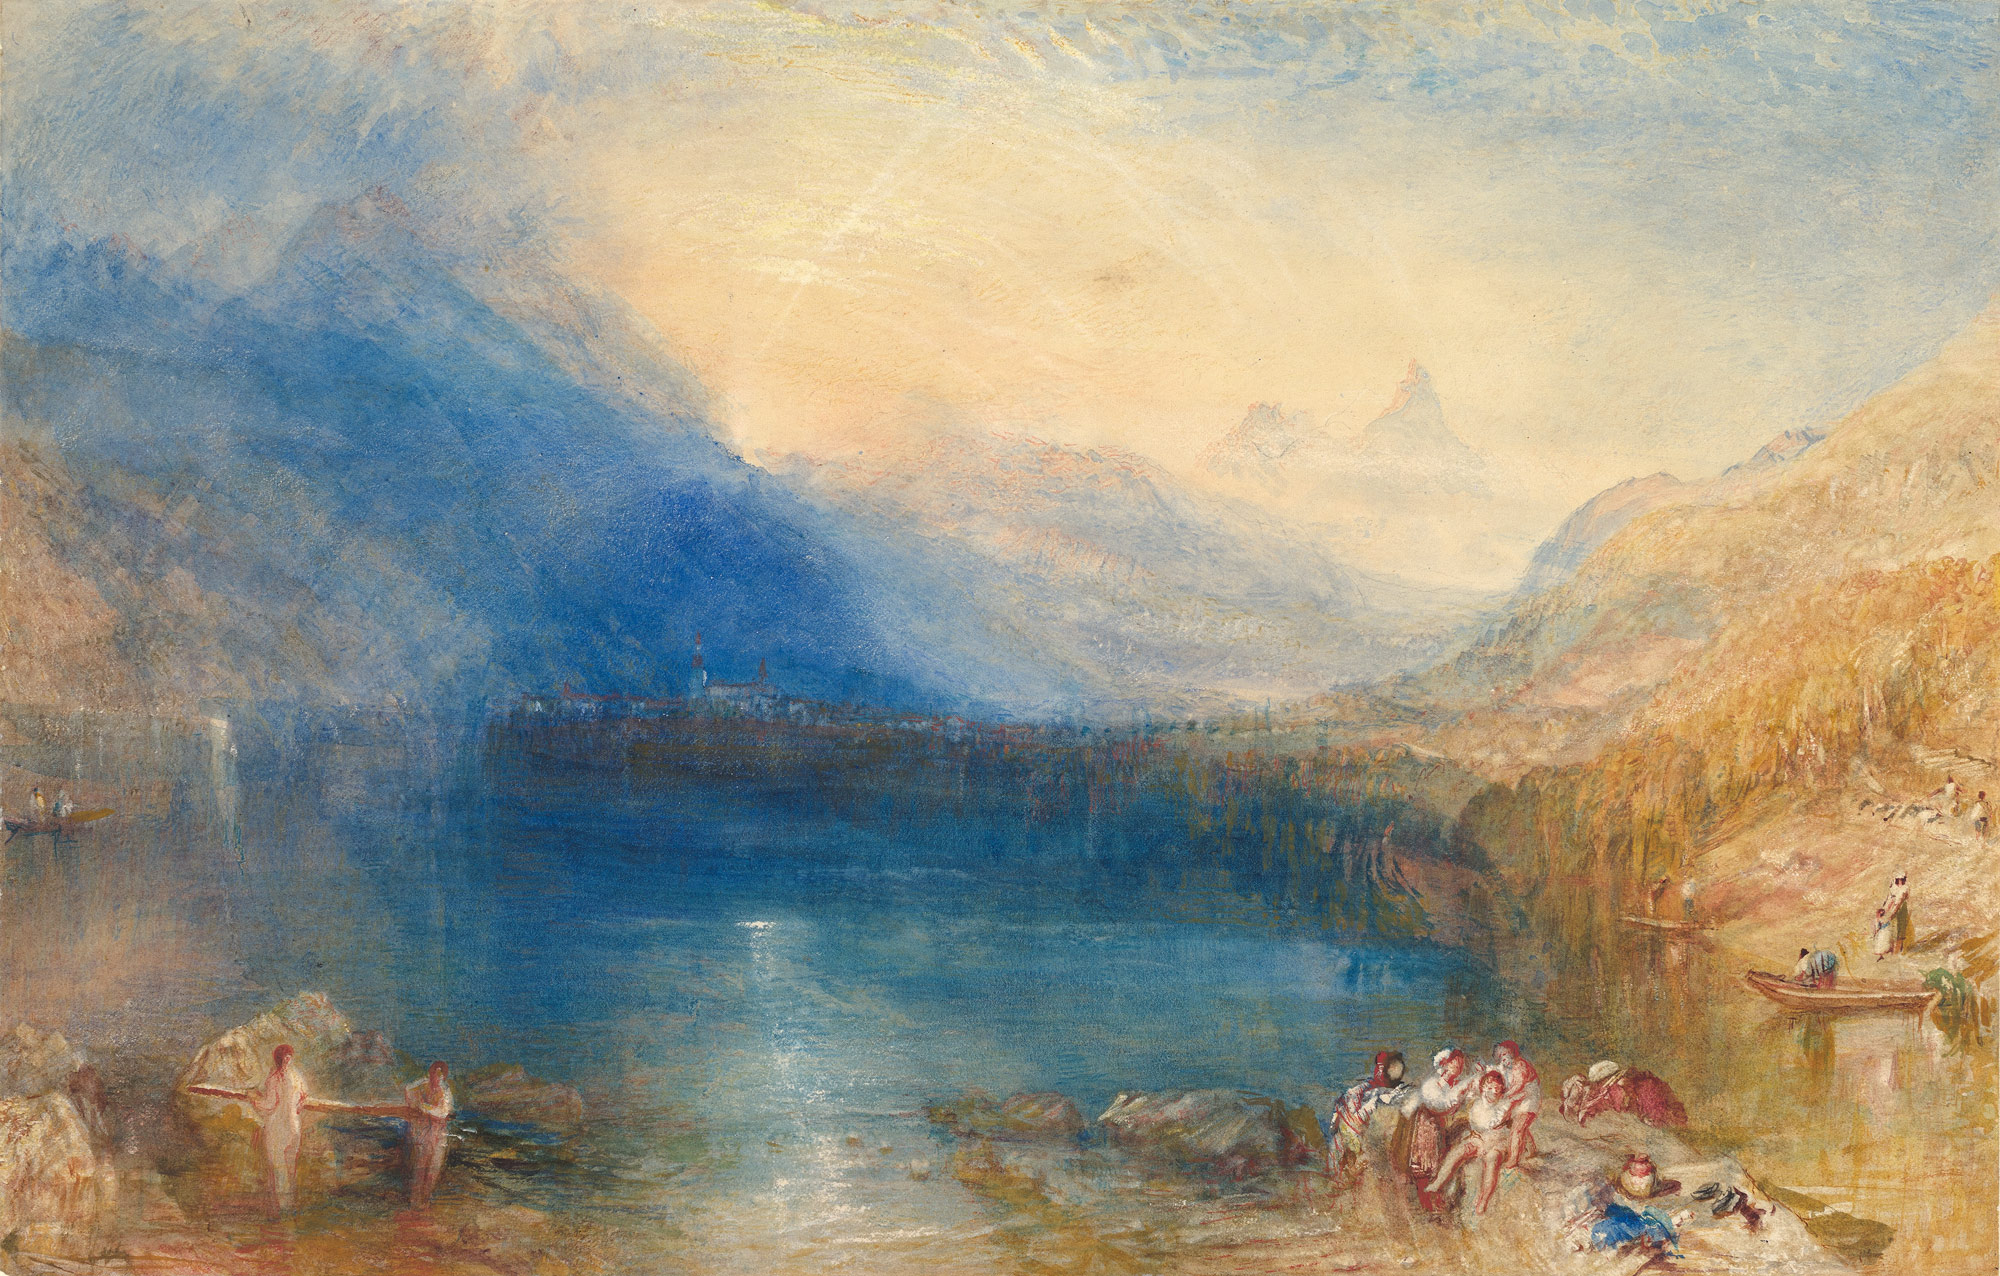 بحيرة زاج  by Joseph Mallord William Turner - 1843 - 11 3/4 x 18 3/8 انش 